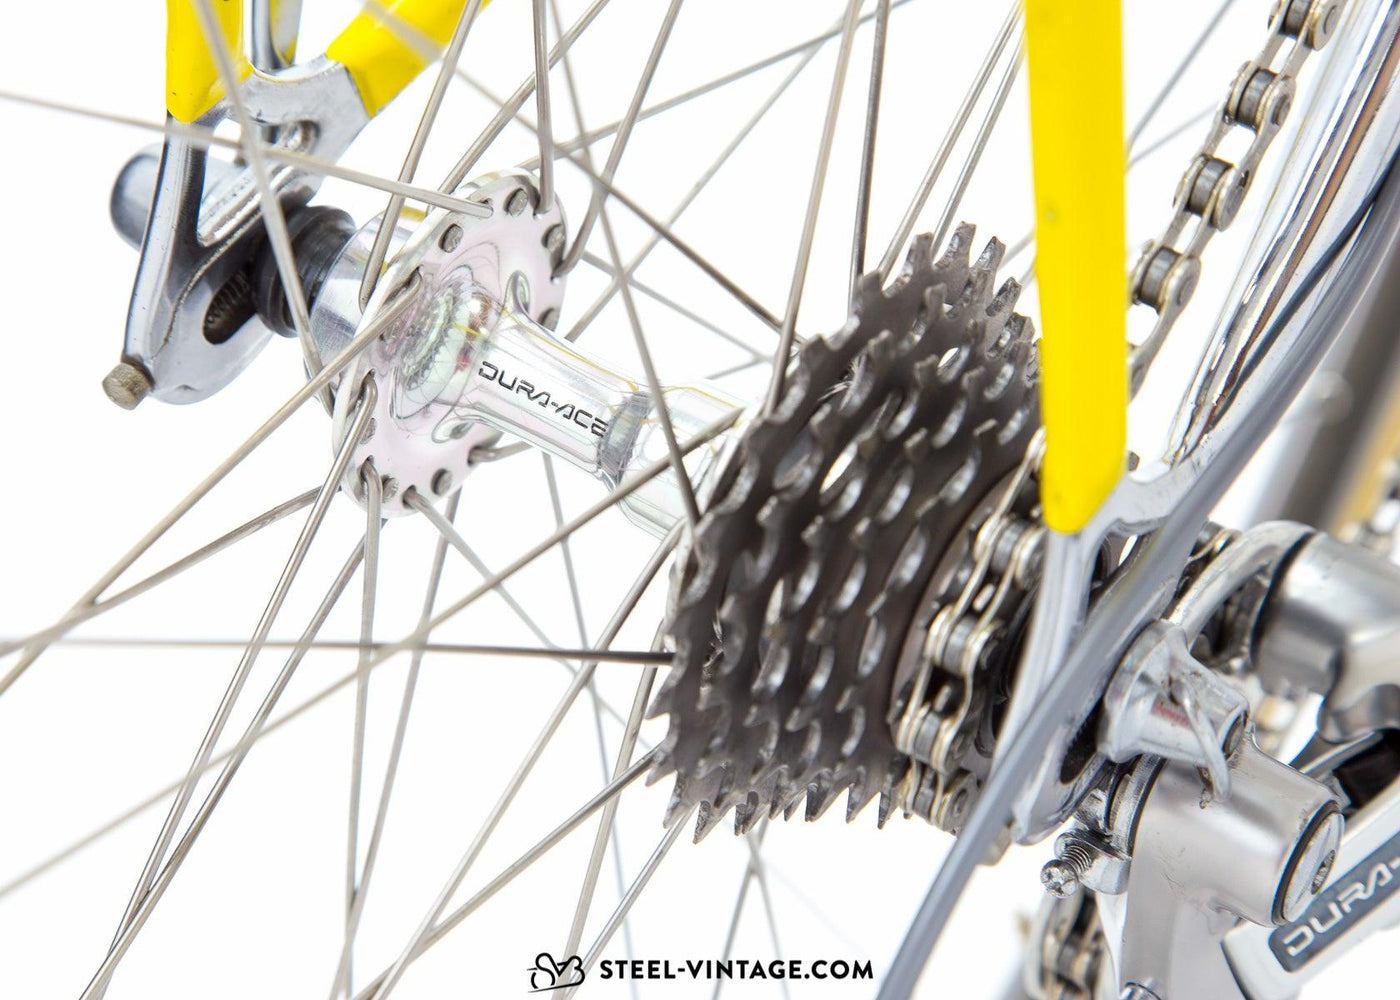 Eddy Merckx Corsa Extra Team La William Road Bike 1980s - Steel Vintage Bikes